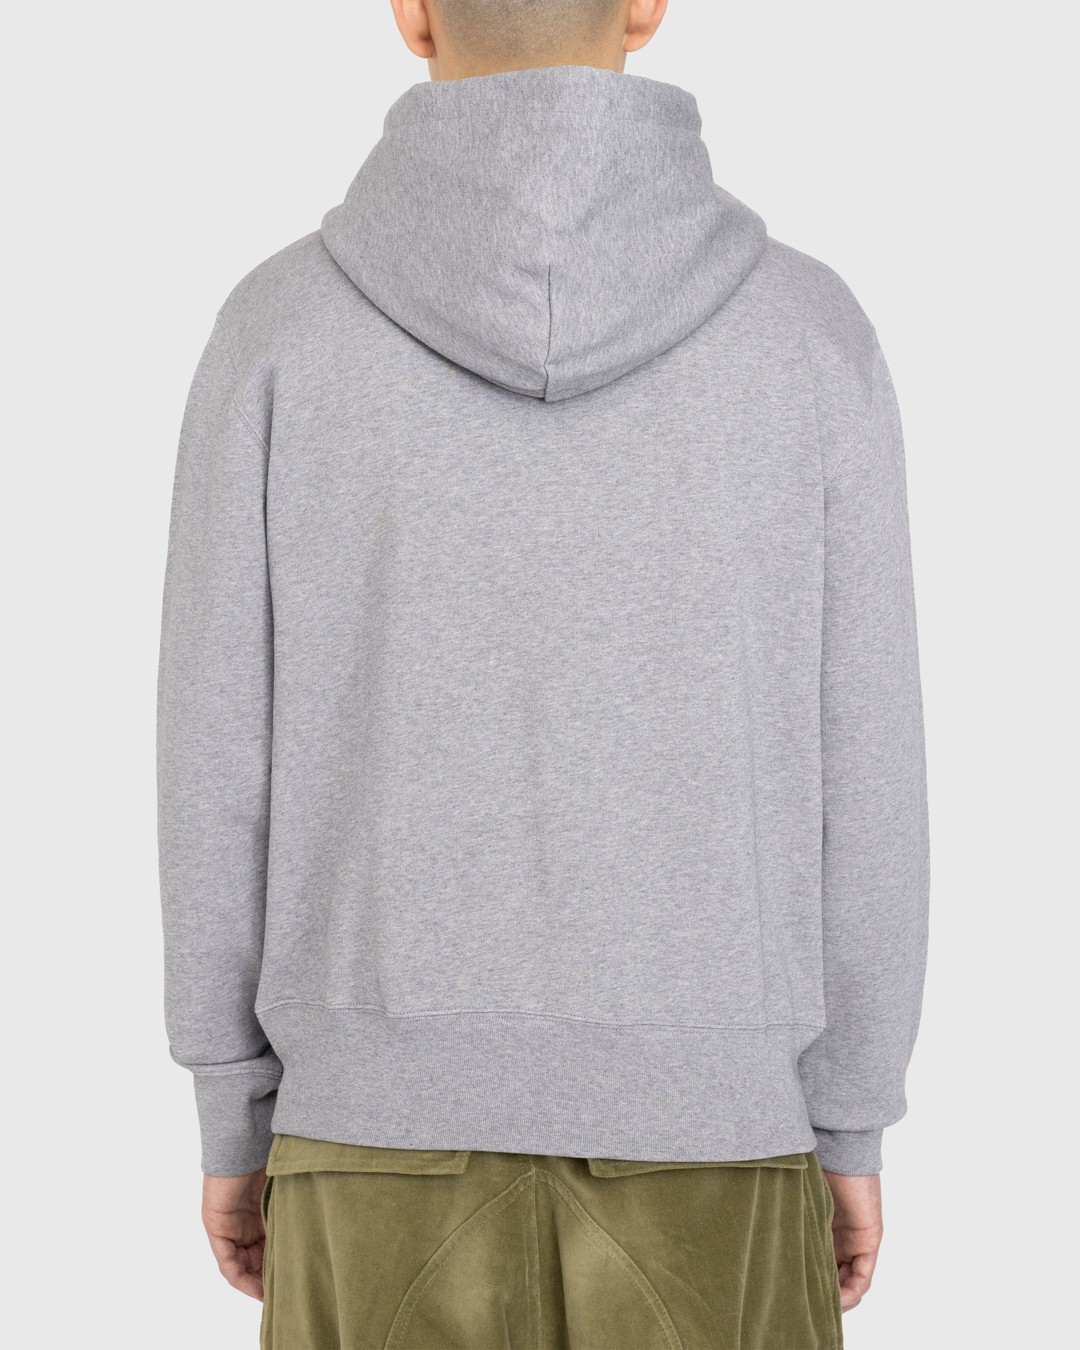 Acne Studios – Organic Cotton Hooded Sweatshirt Grey - Sweats - Grey - Image 4